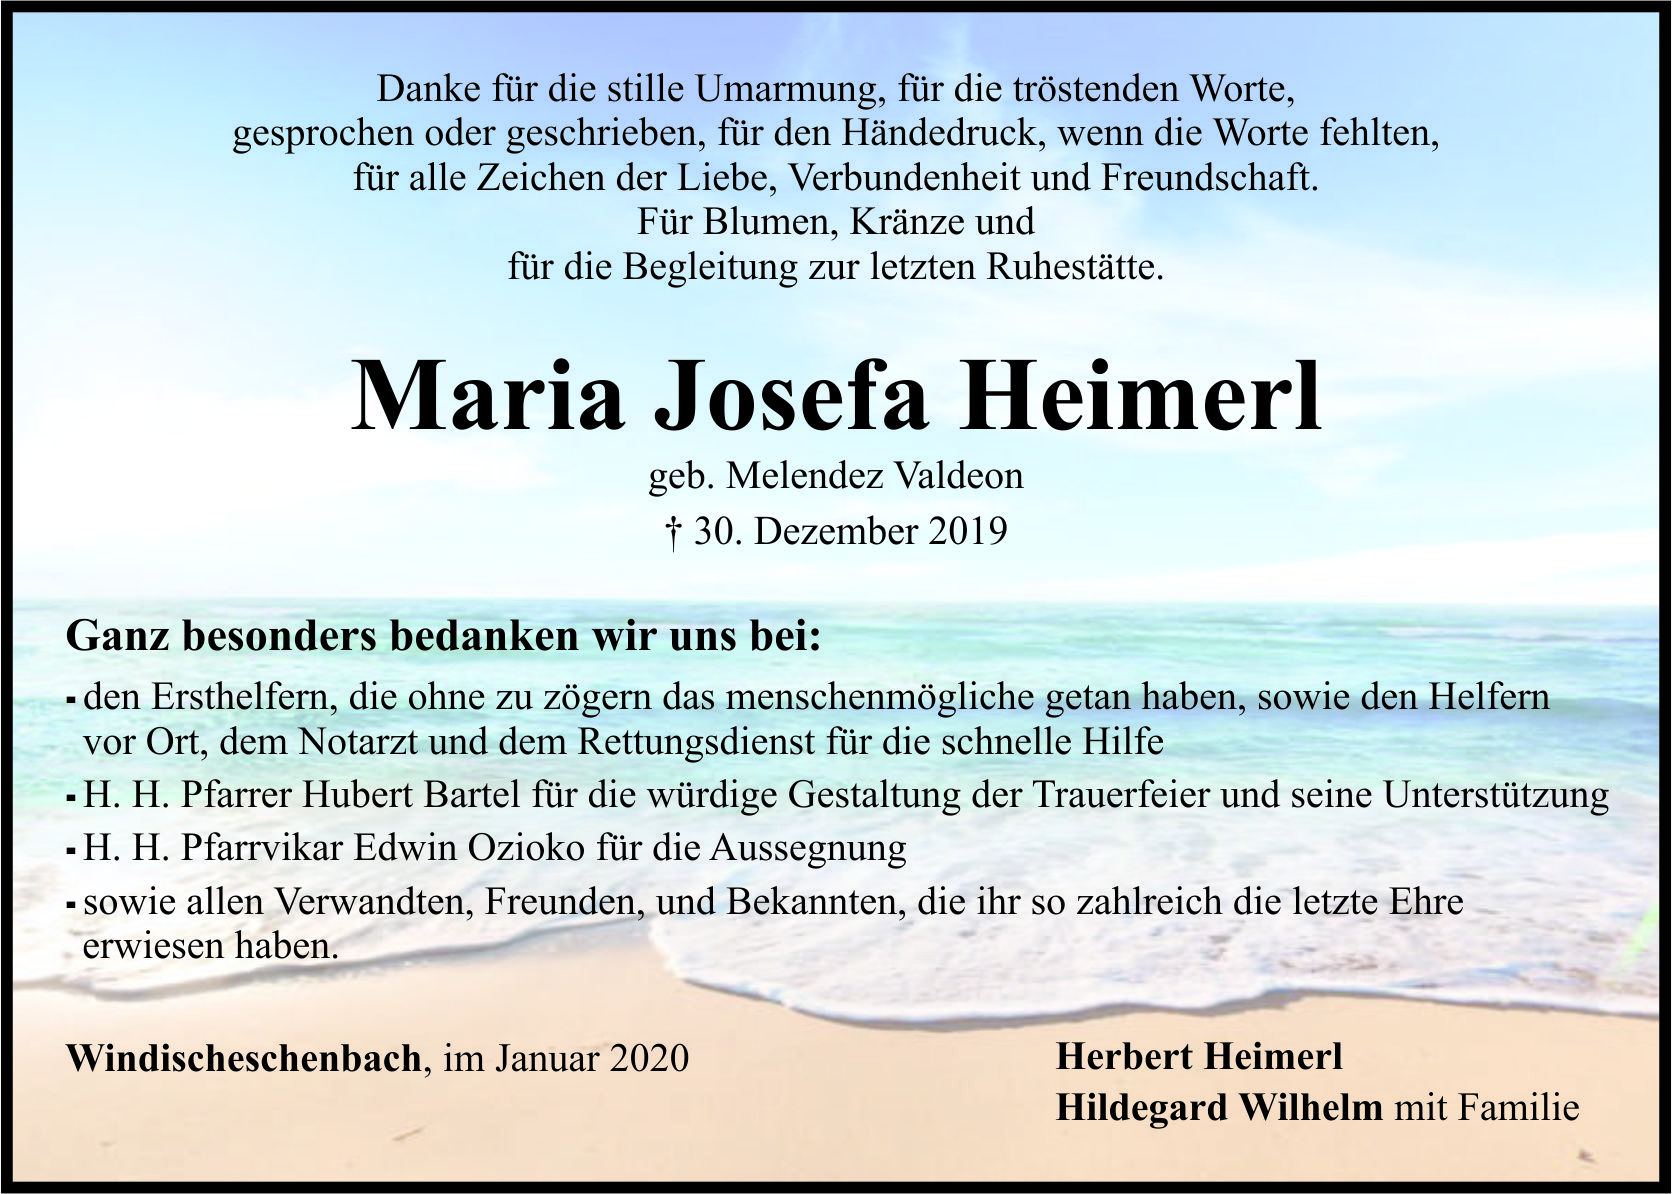 Danksagung Maria Josefa Heimerl, Windischeschenbach